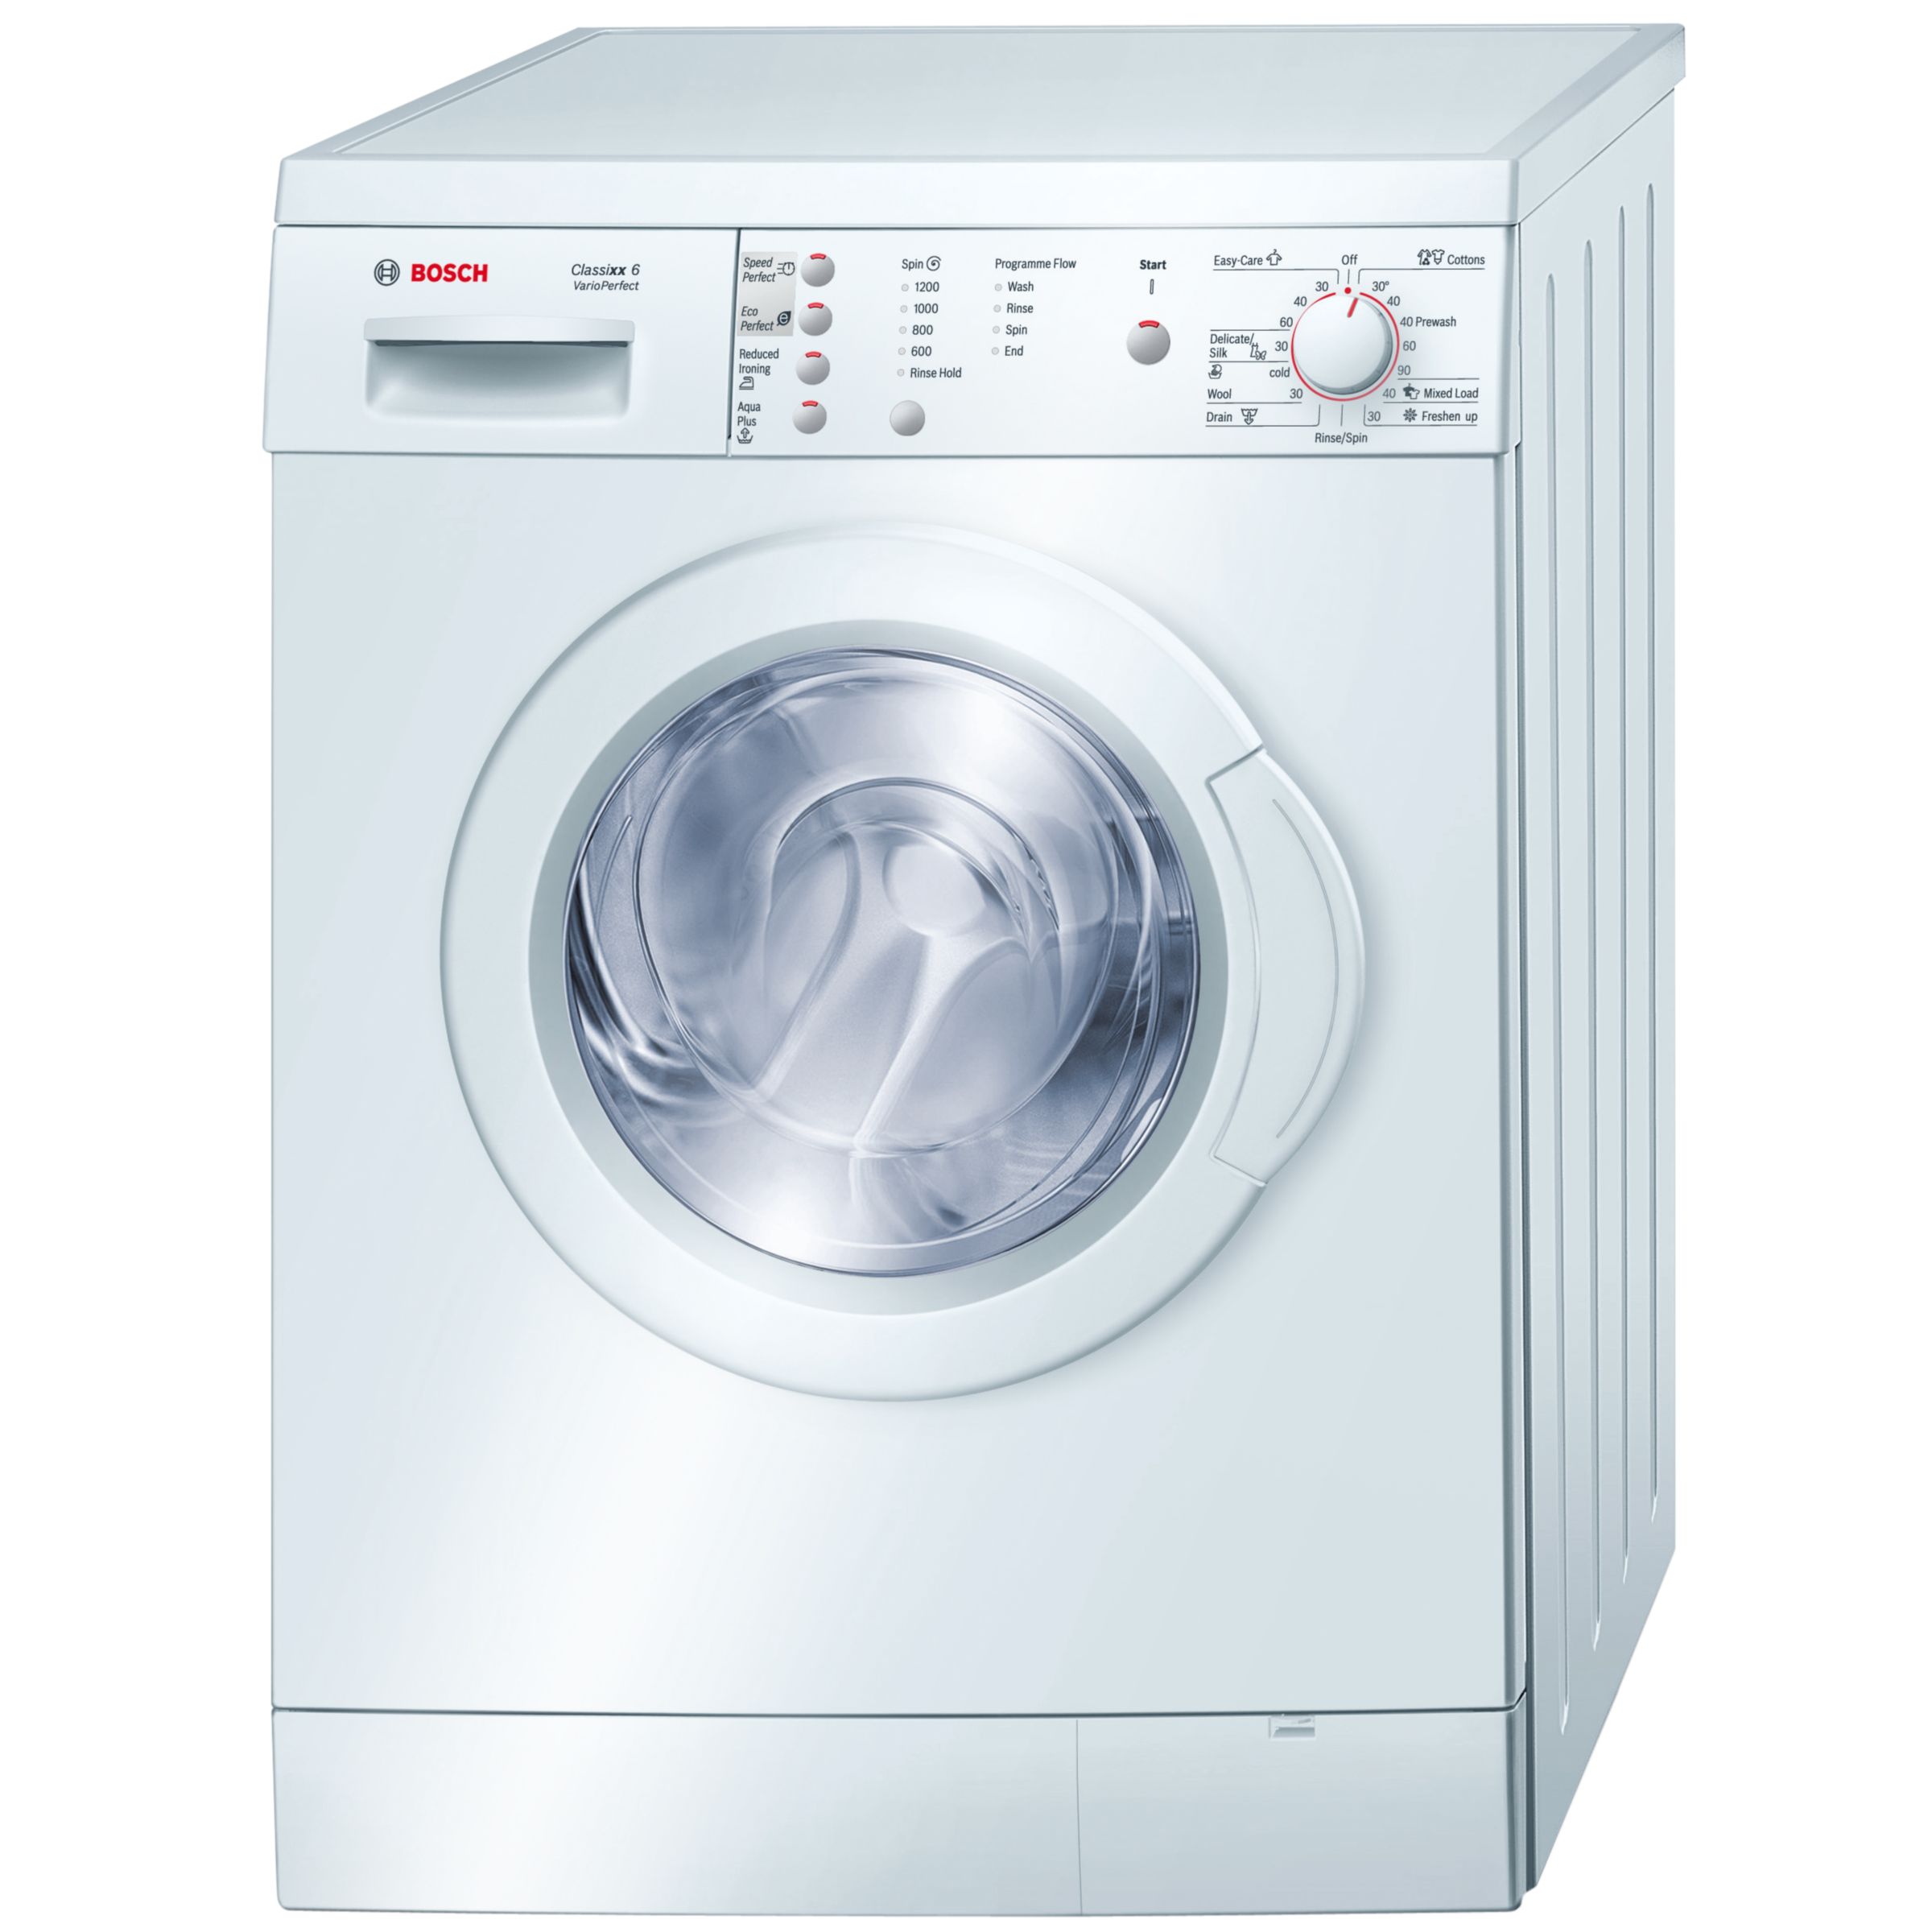 Bosch Classixx WAE24165GB Washing Machine, White at John Lewis